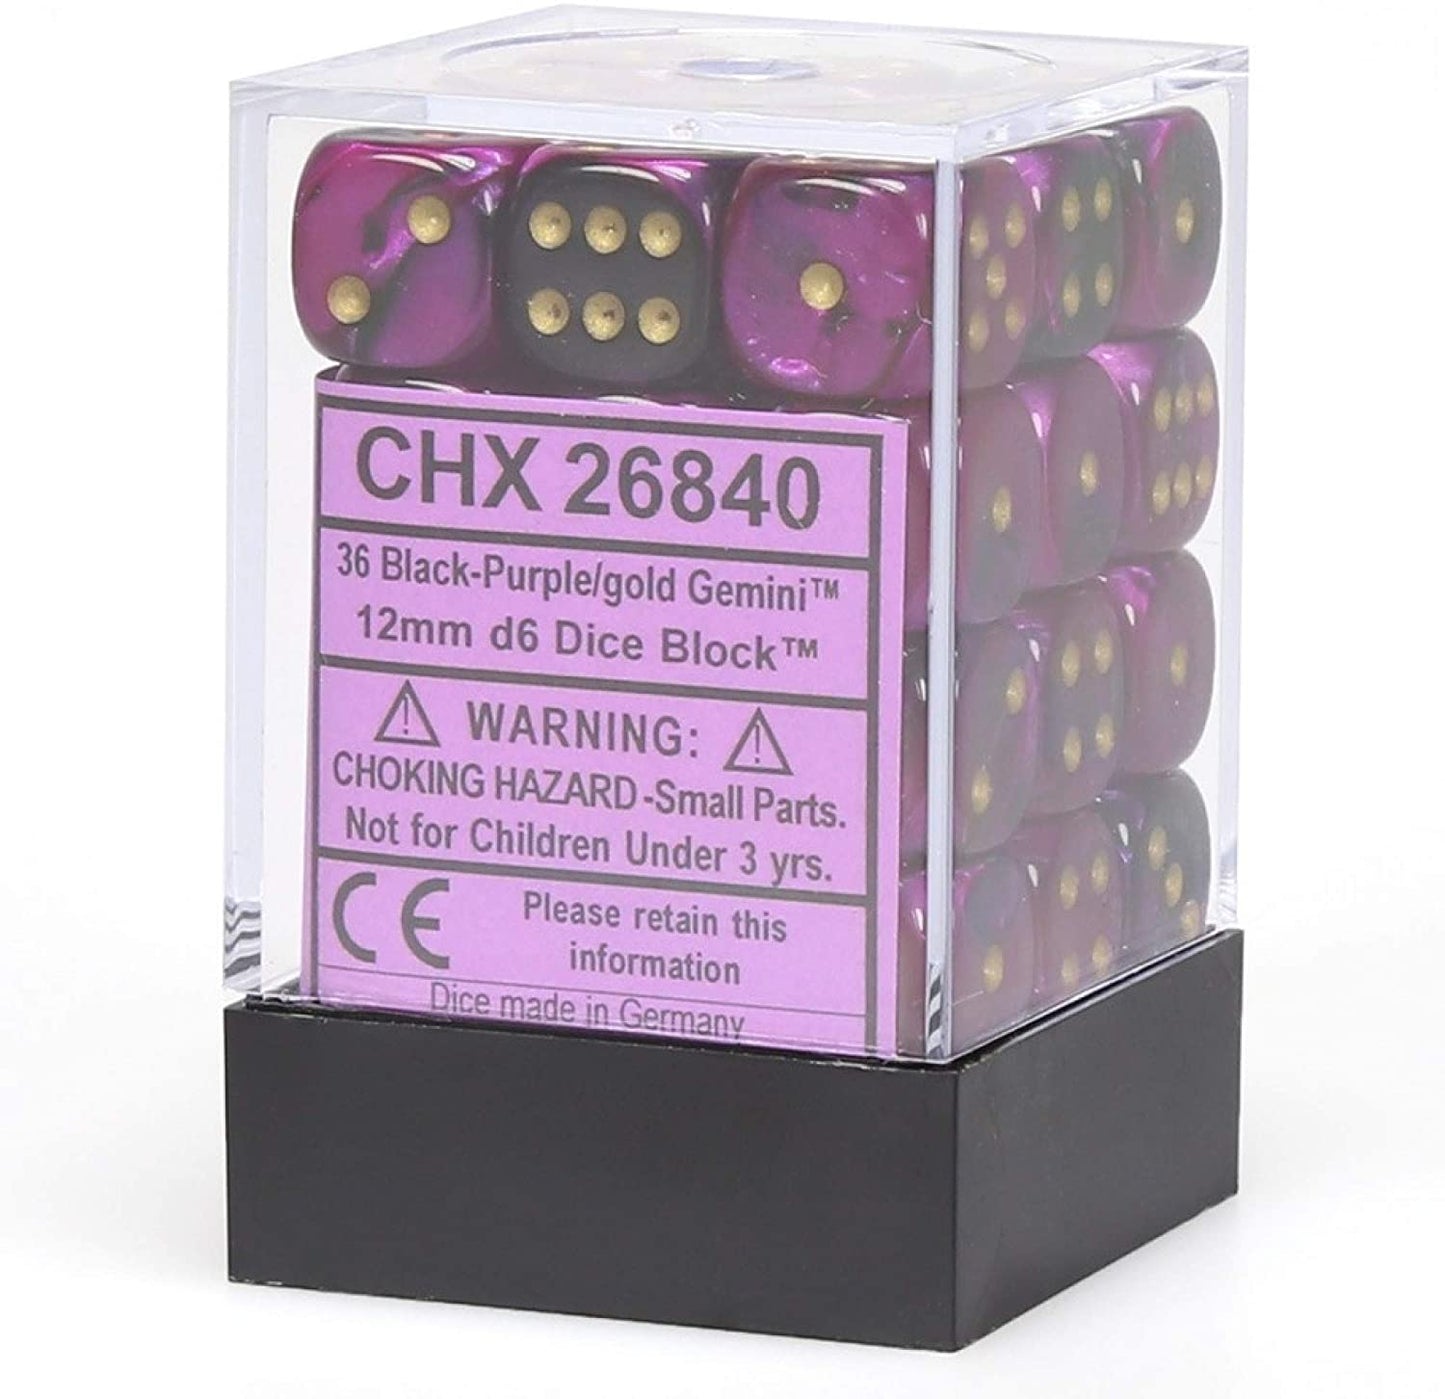 Chessex Dice: D6 Block 12mm - Gemini - Black-Purple with Gold (CHX 26840) - Gamescape